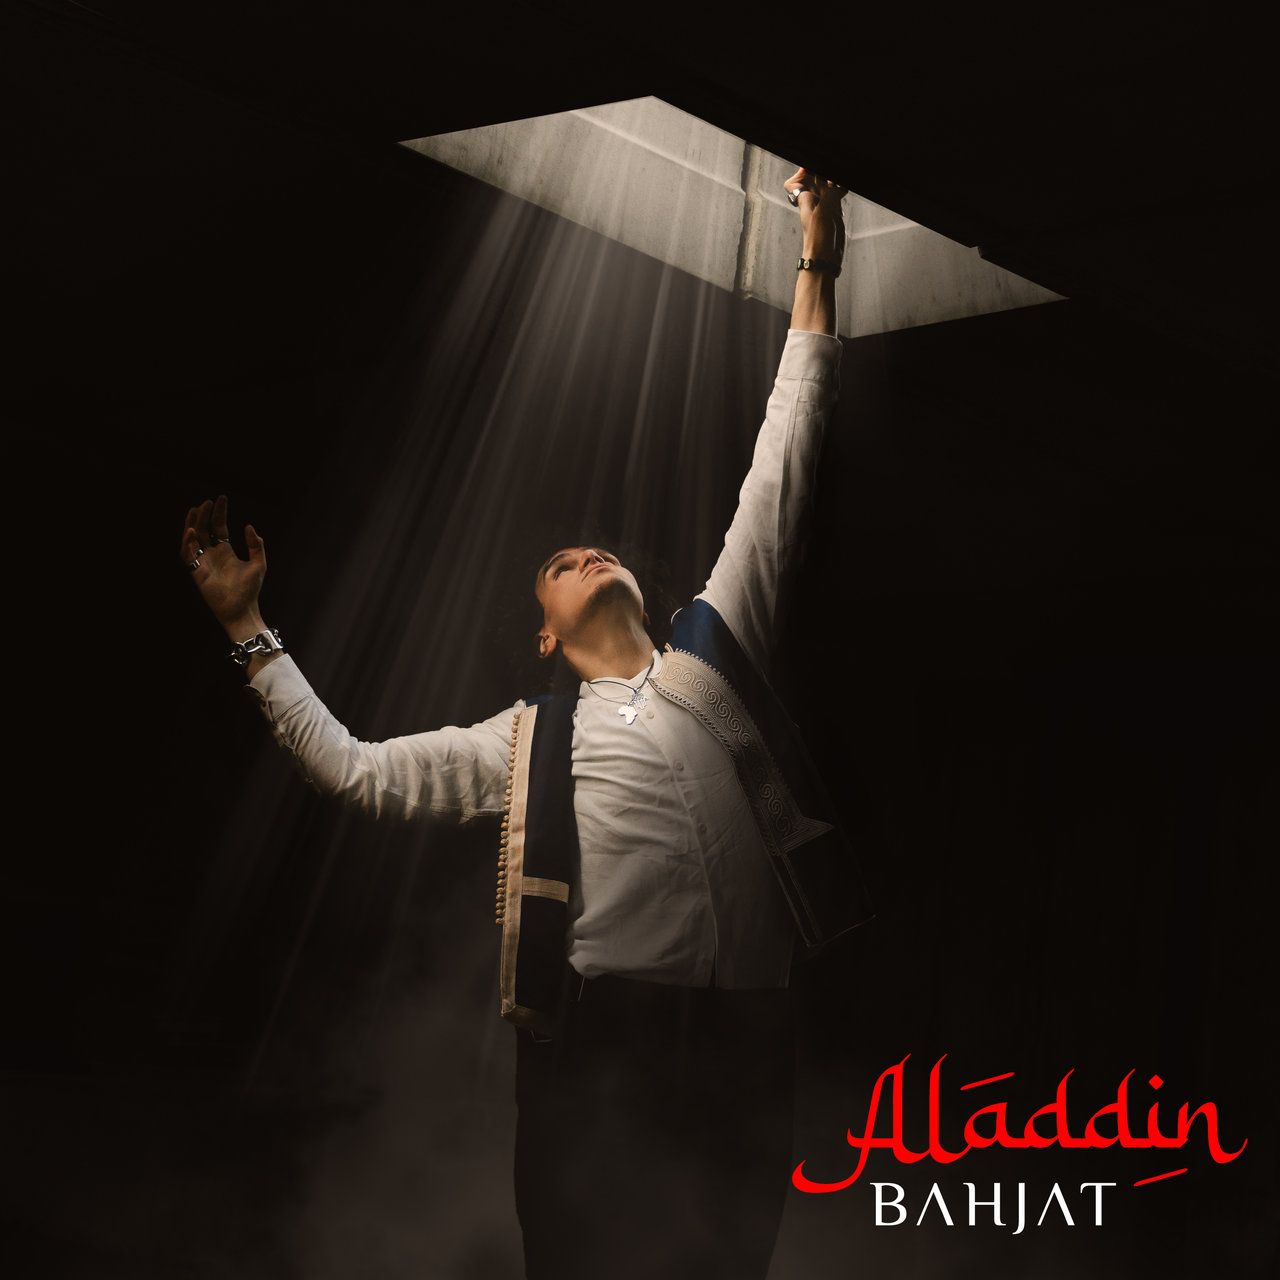 Bahjat Aladdin cover artwork